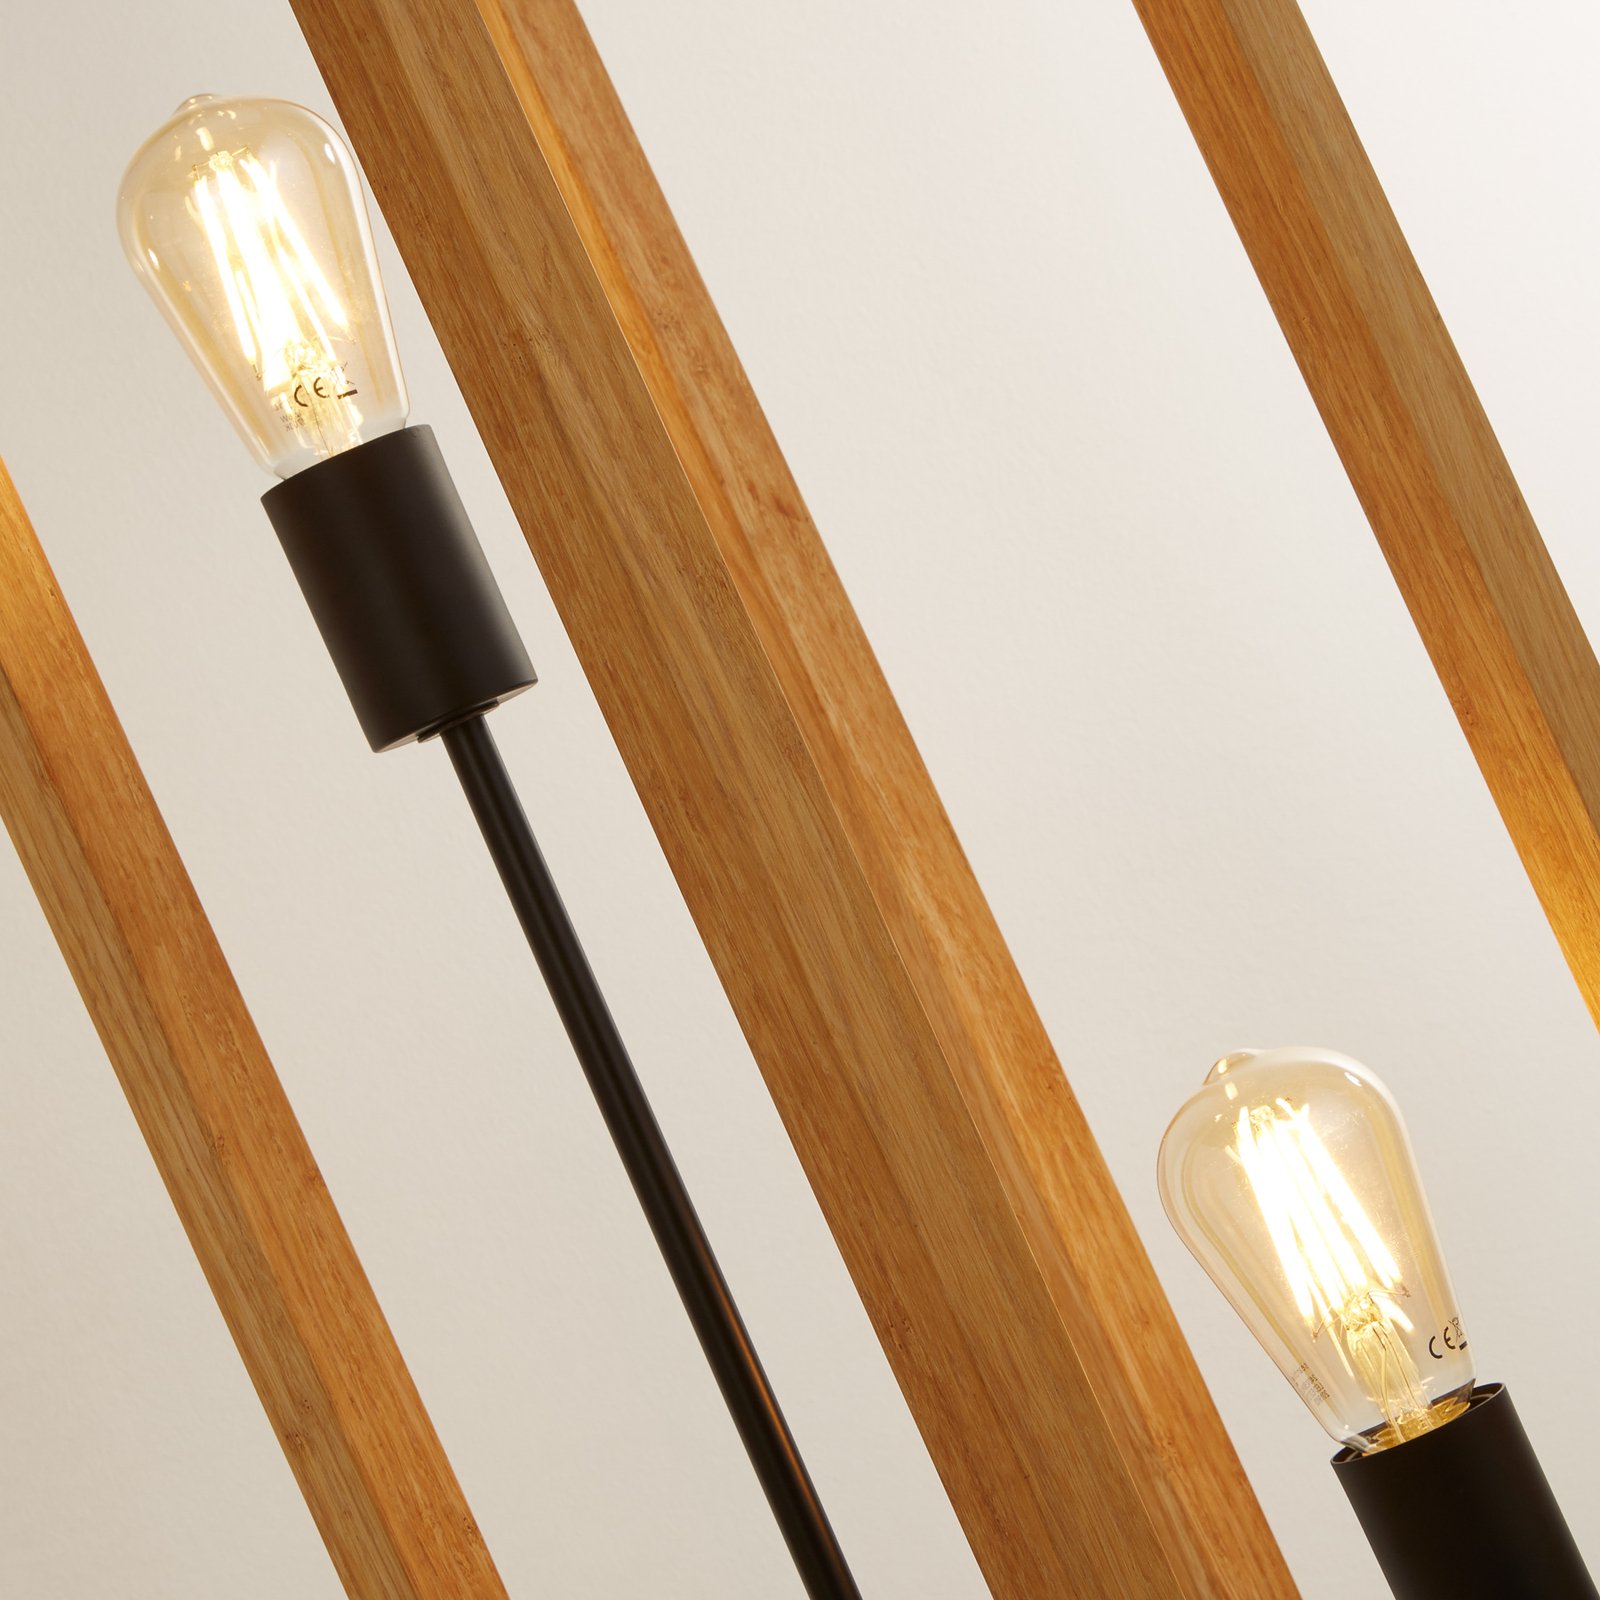 Square gulvlampe af bambus